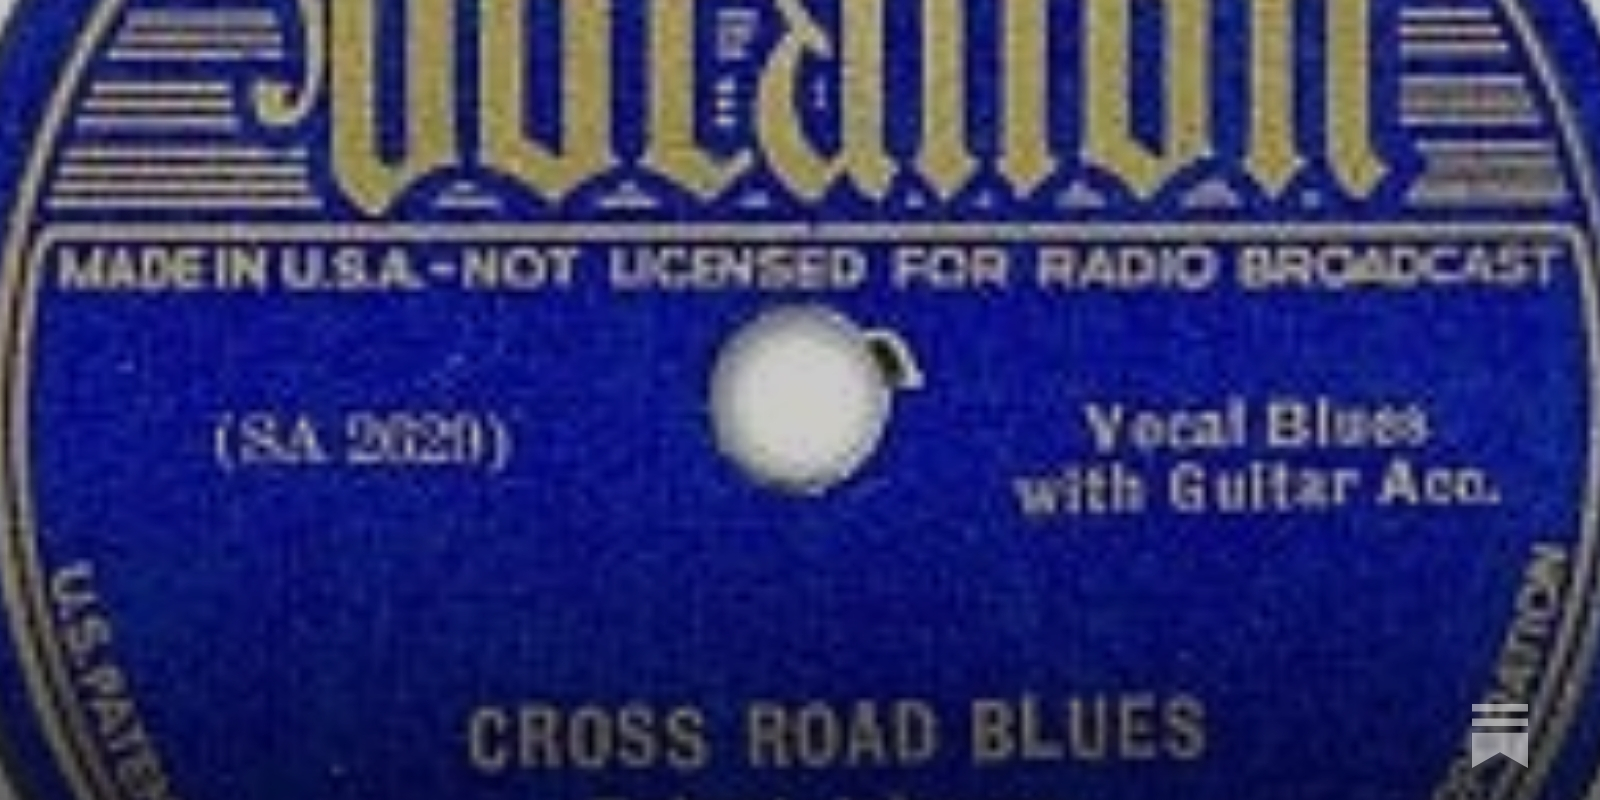 Proper Introduction to Robert Johnson: Cross Road Blues